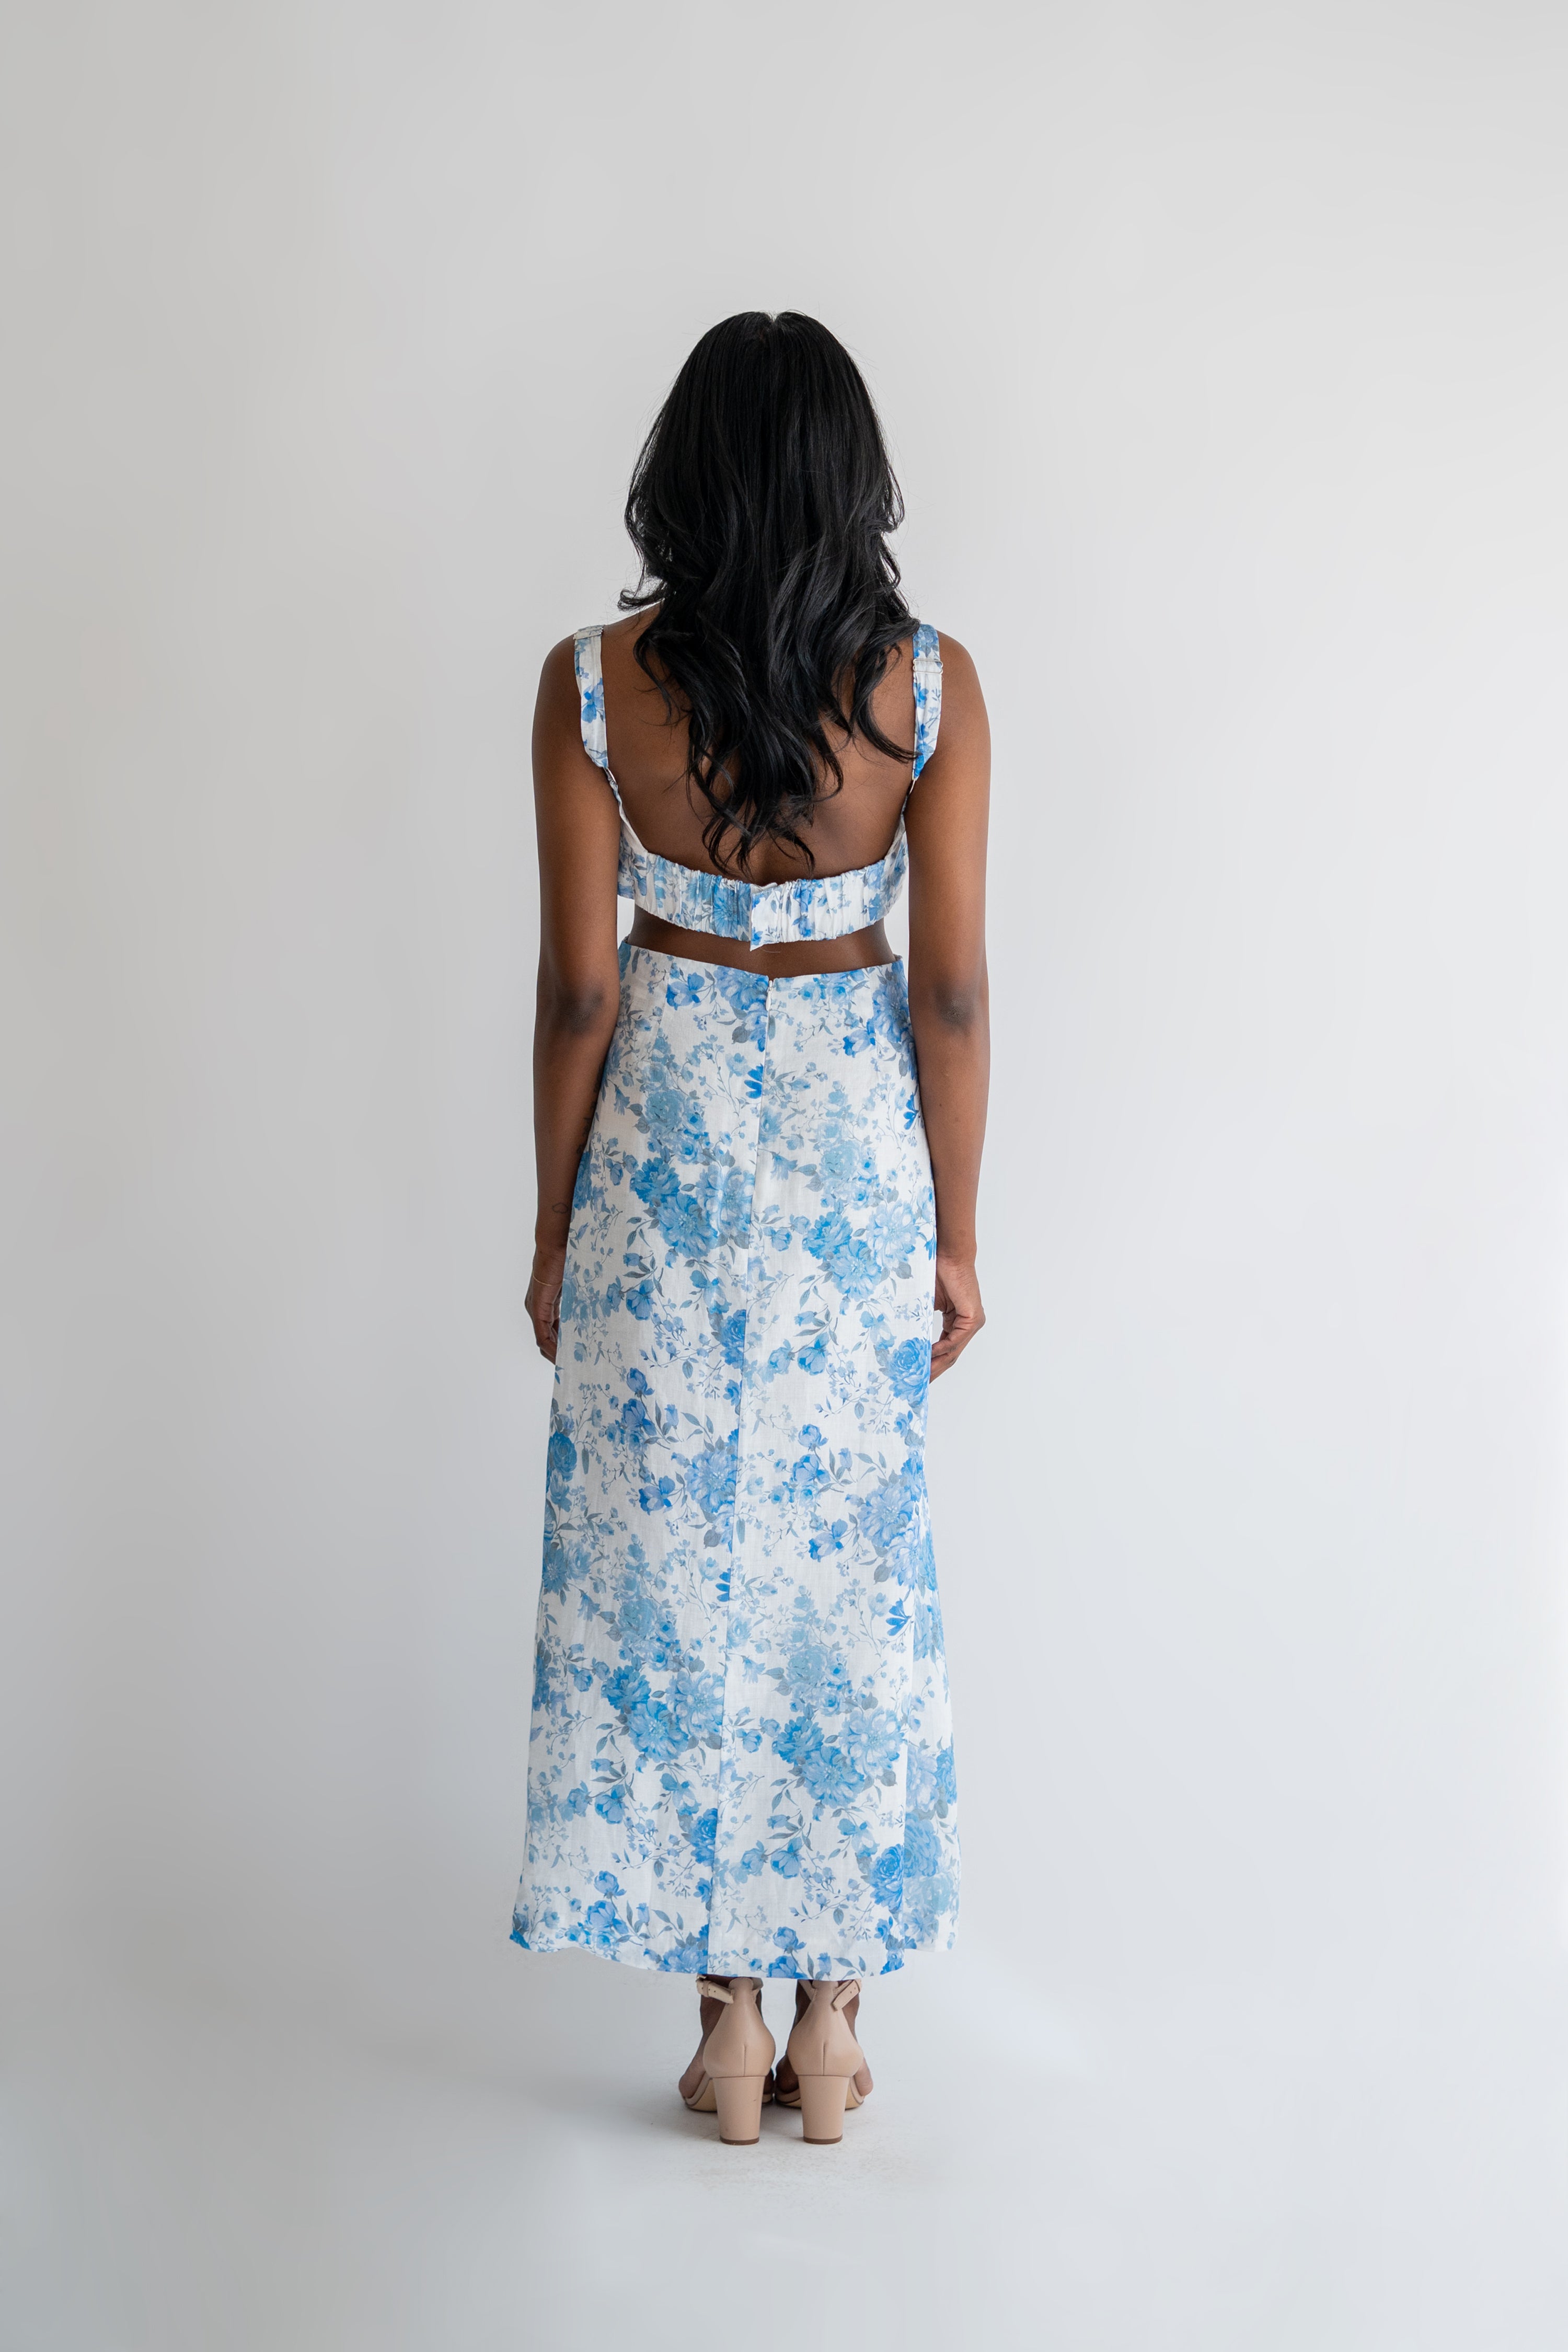 Skye Blue Floral Cut Out Maxi Dress